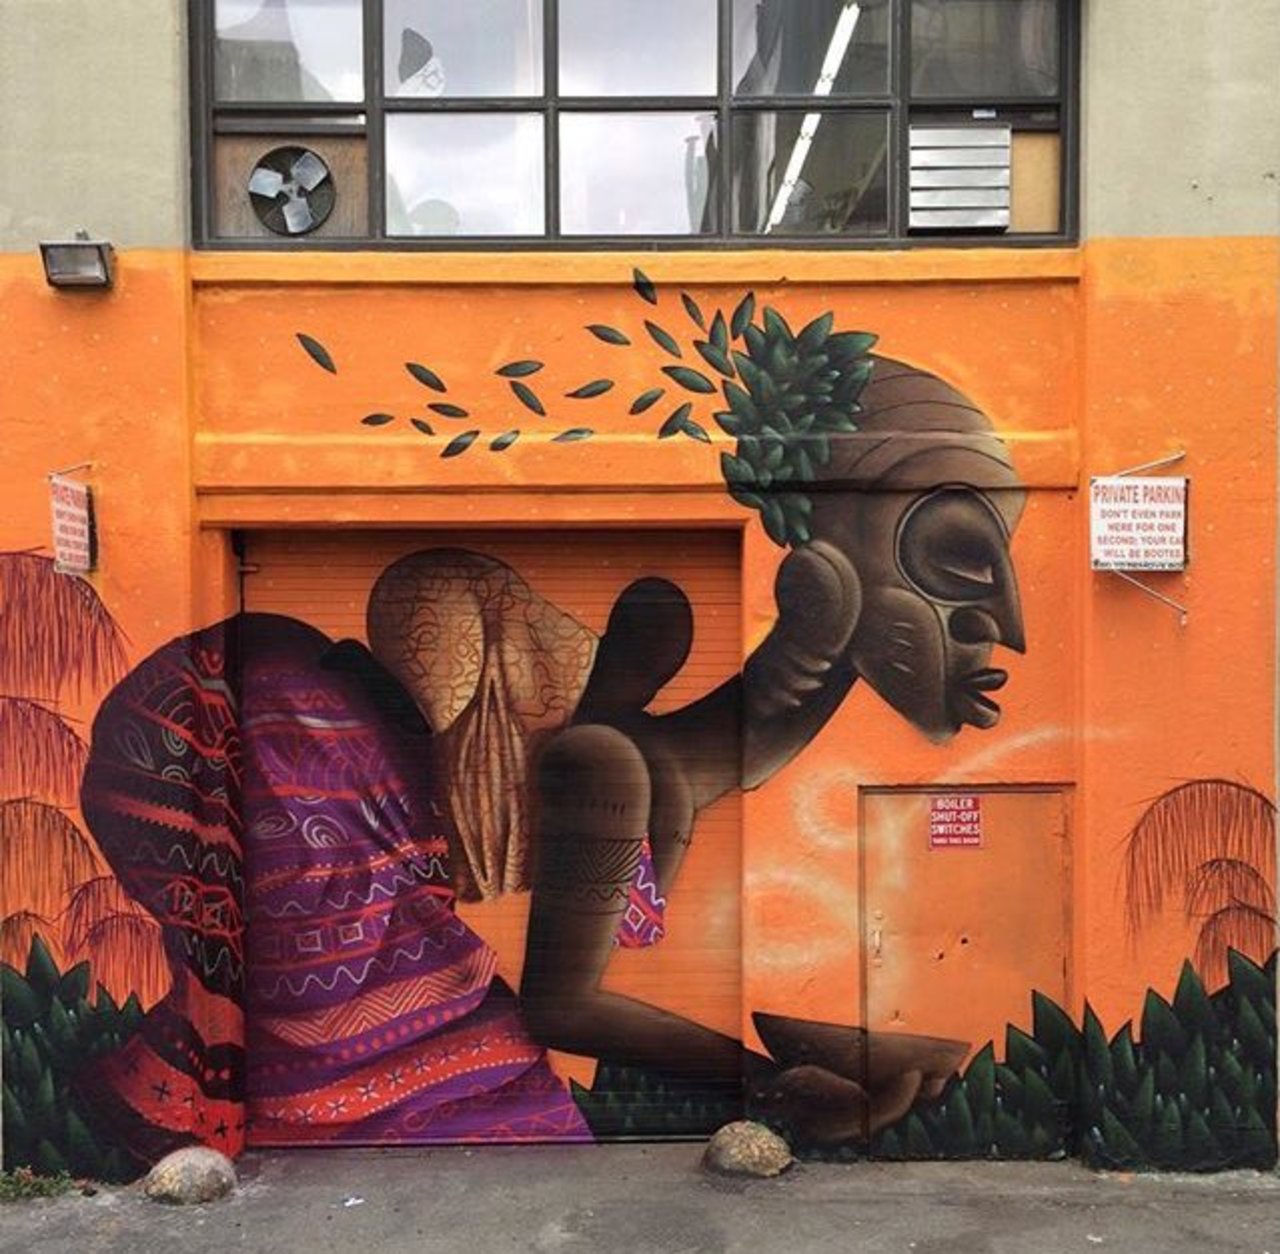 New Street Art by Alexandre Keto in NYC 

#art #graffiti #mural #streetart https://t.co/ggHpMq8ygk